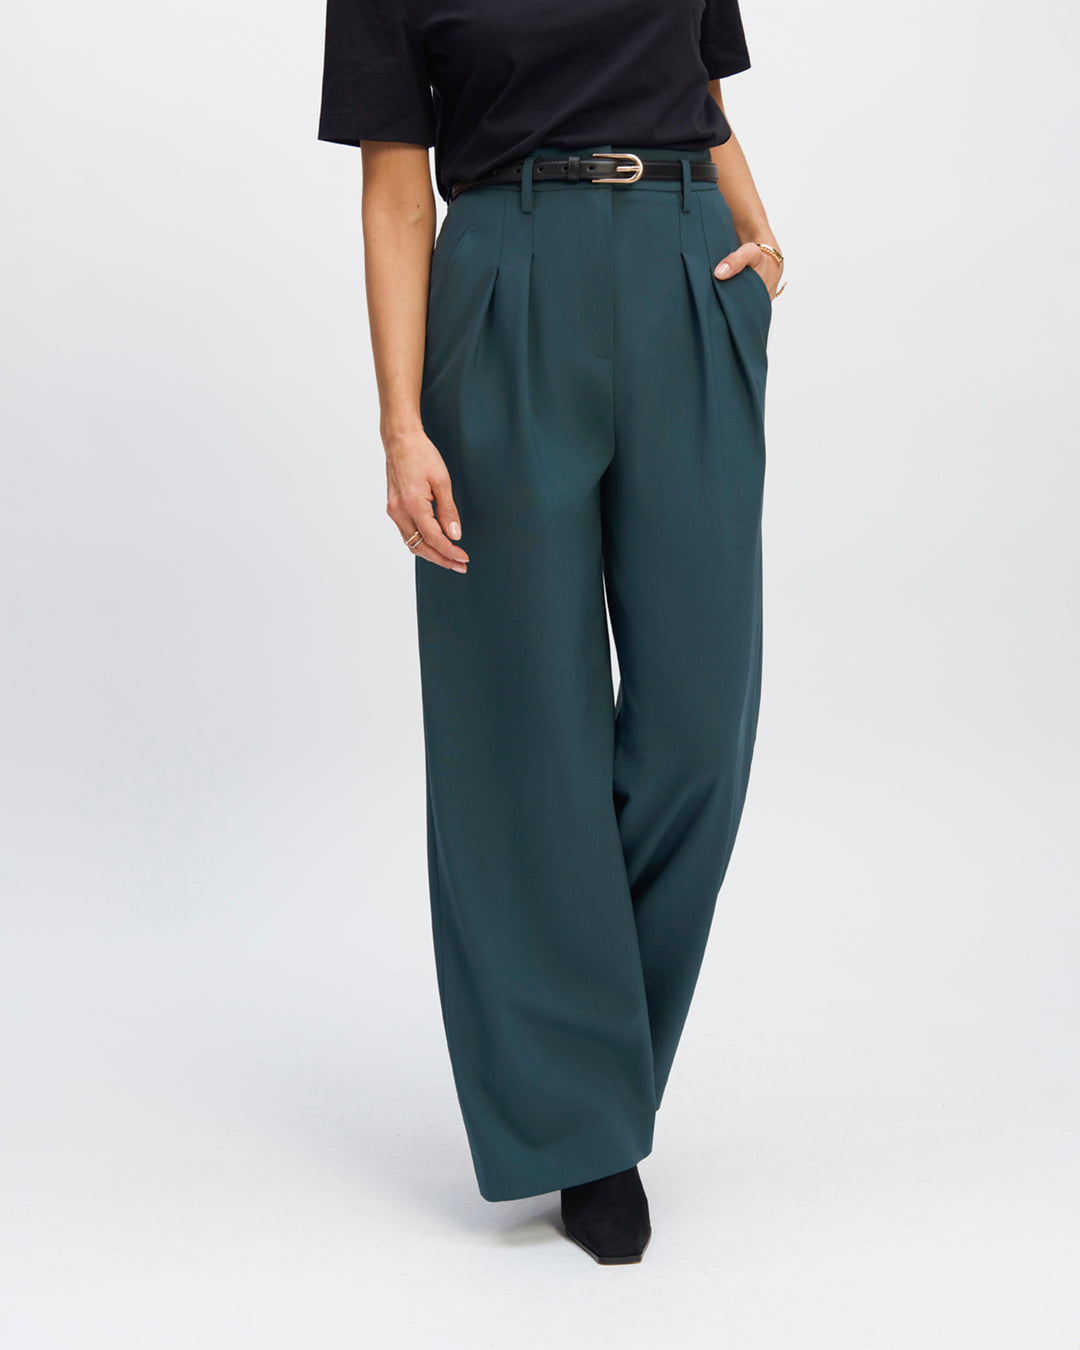 "Tailored trousers-green-cut-palazzo-high-waist-details-double-plies-low-leg-XXL-draws-the-waist-and-legs-belt-buckle-detachable-belt-tone-on-tone-buckle-17H10-tailored-trousers-for-women-paris-"